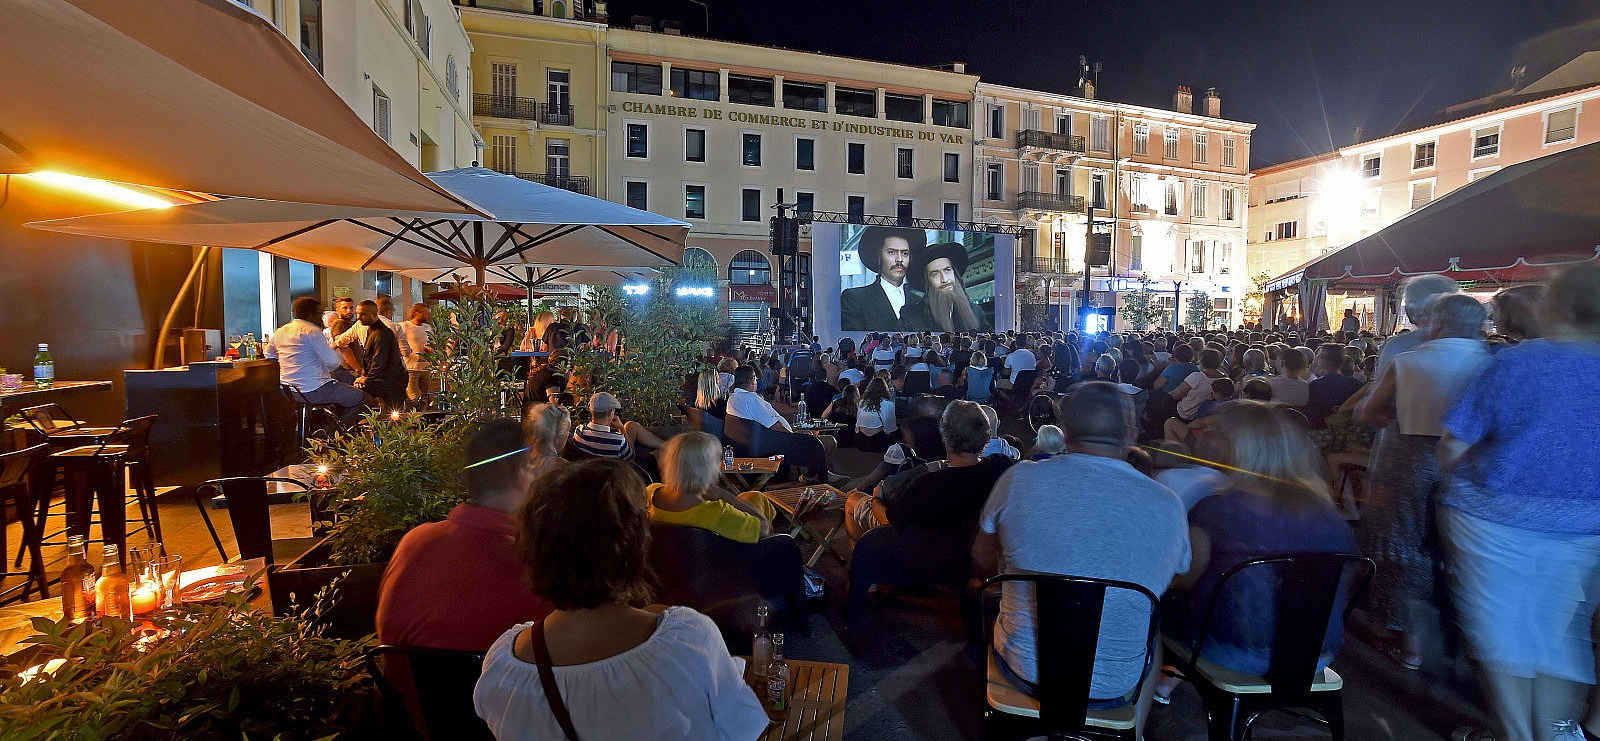 Open-air cinema in August